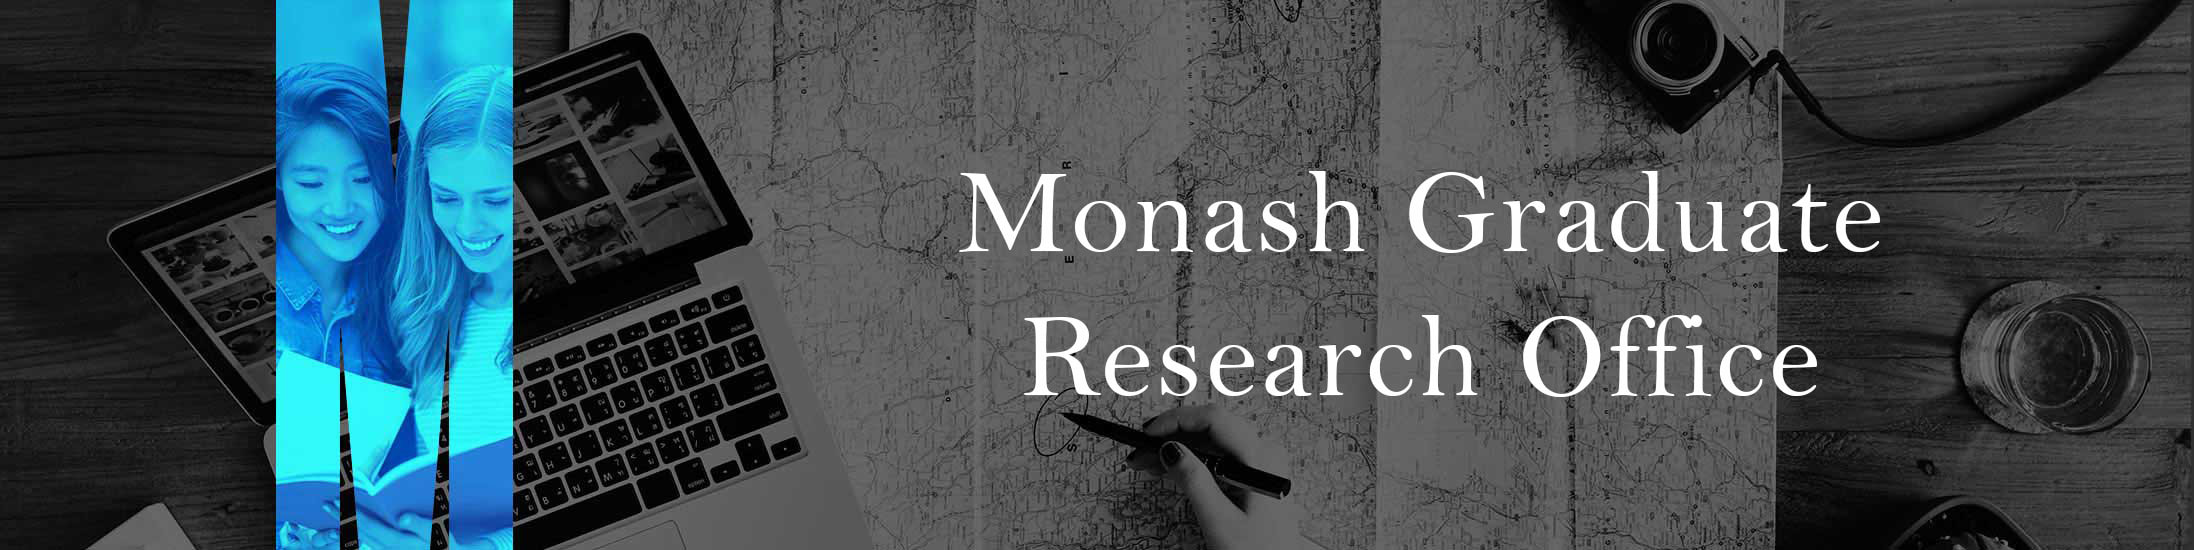 Monash Graduate Research Office